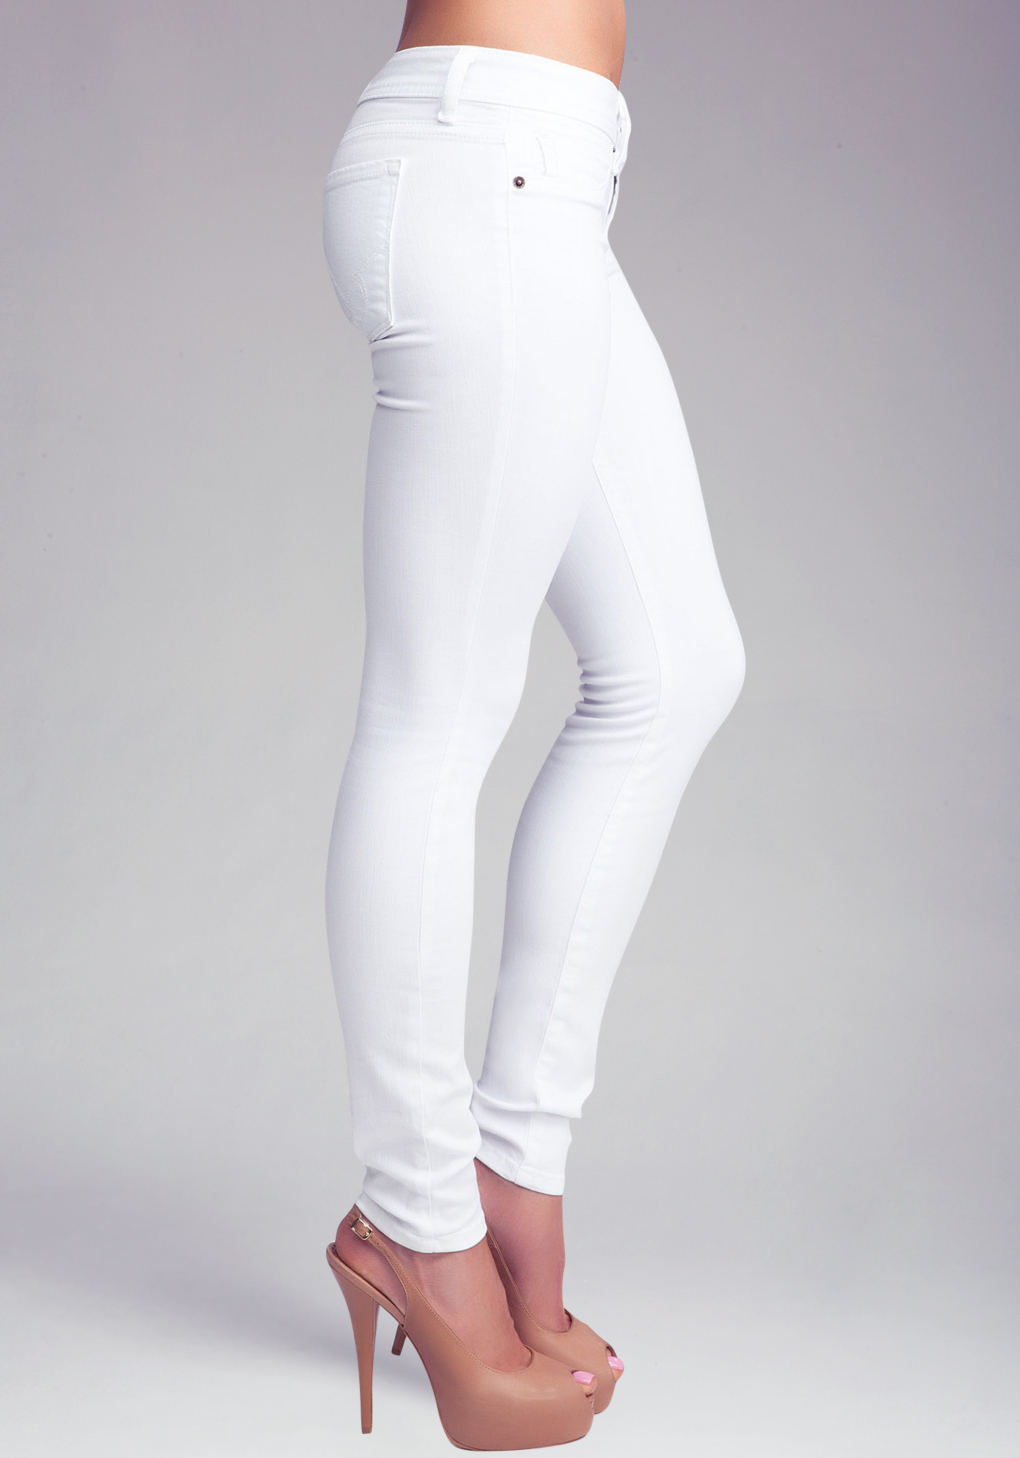 Lyst - Bebe Stretch Skinny Jeans in White